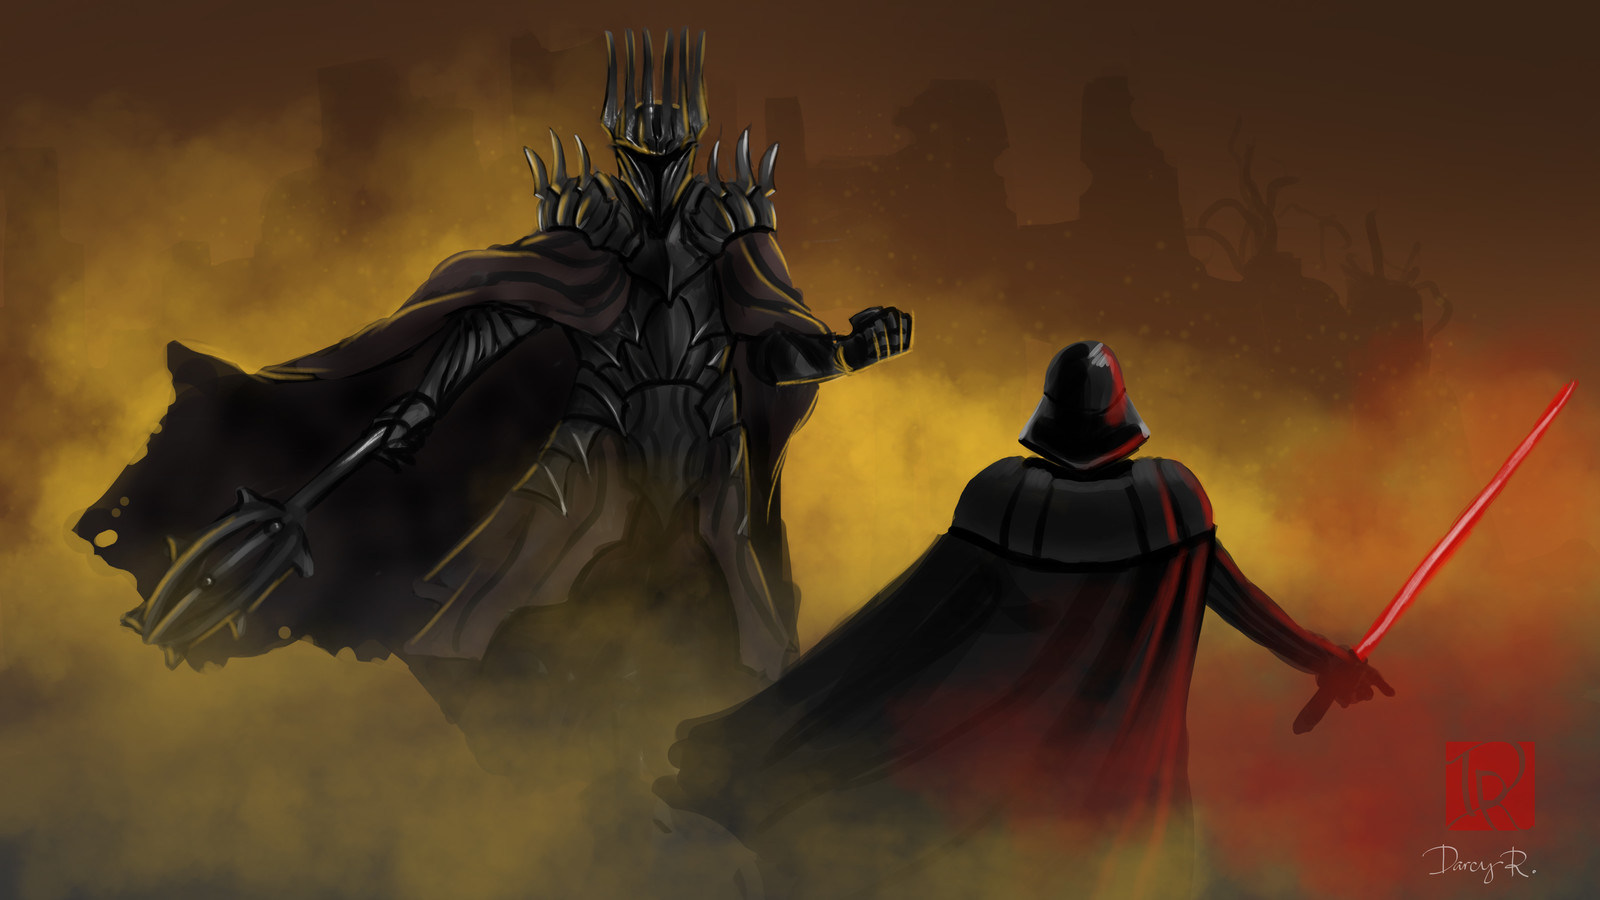 Dark lord vs Sith Lord.